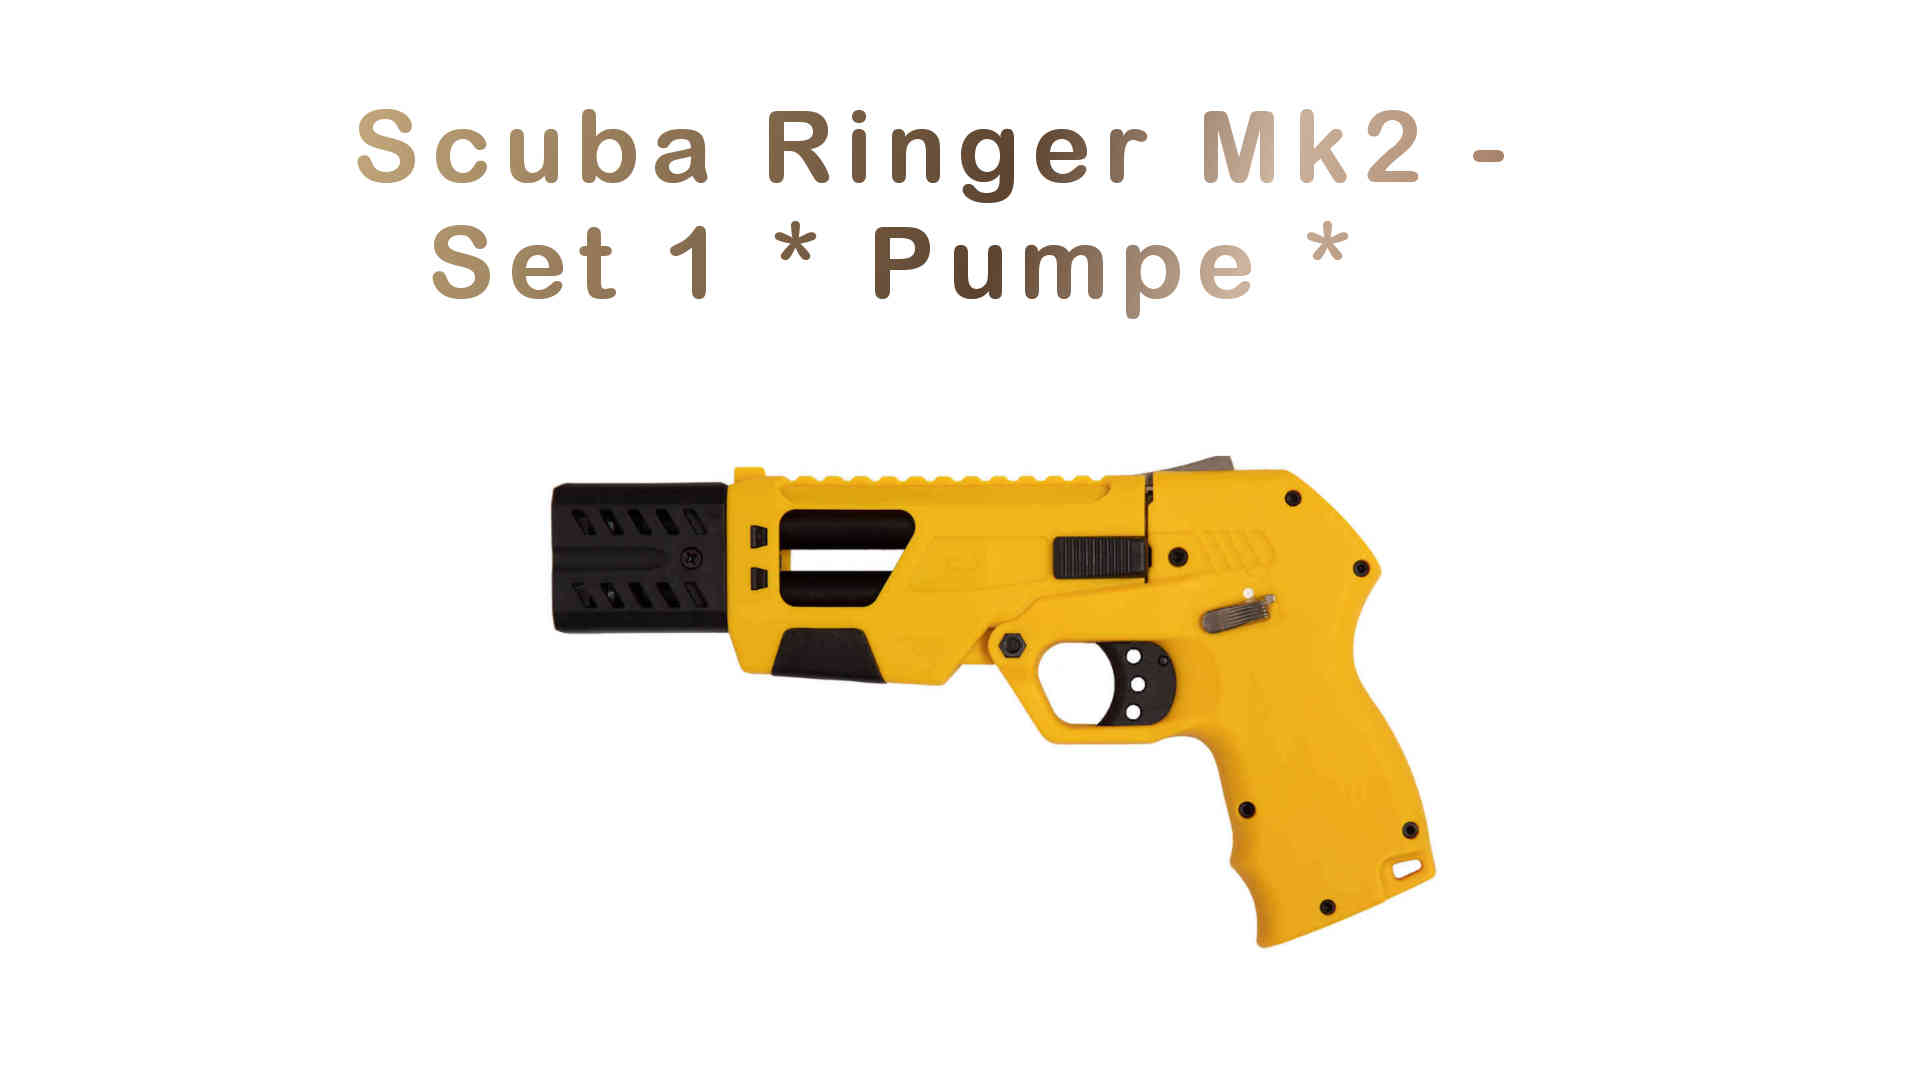 Scuba Ringer MK2 - Set 1 - Pumpe